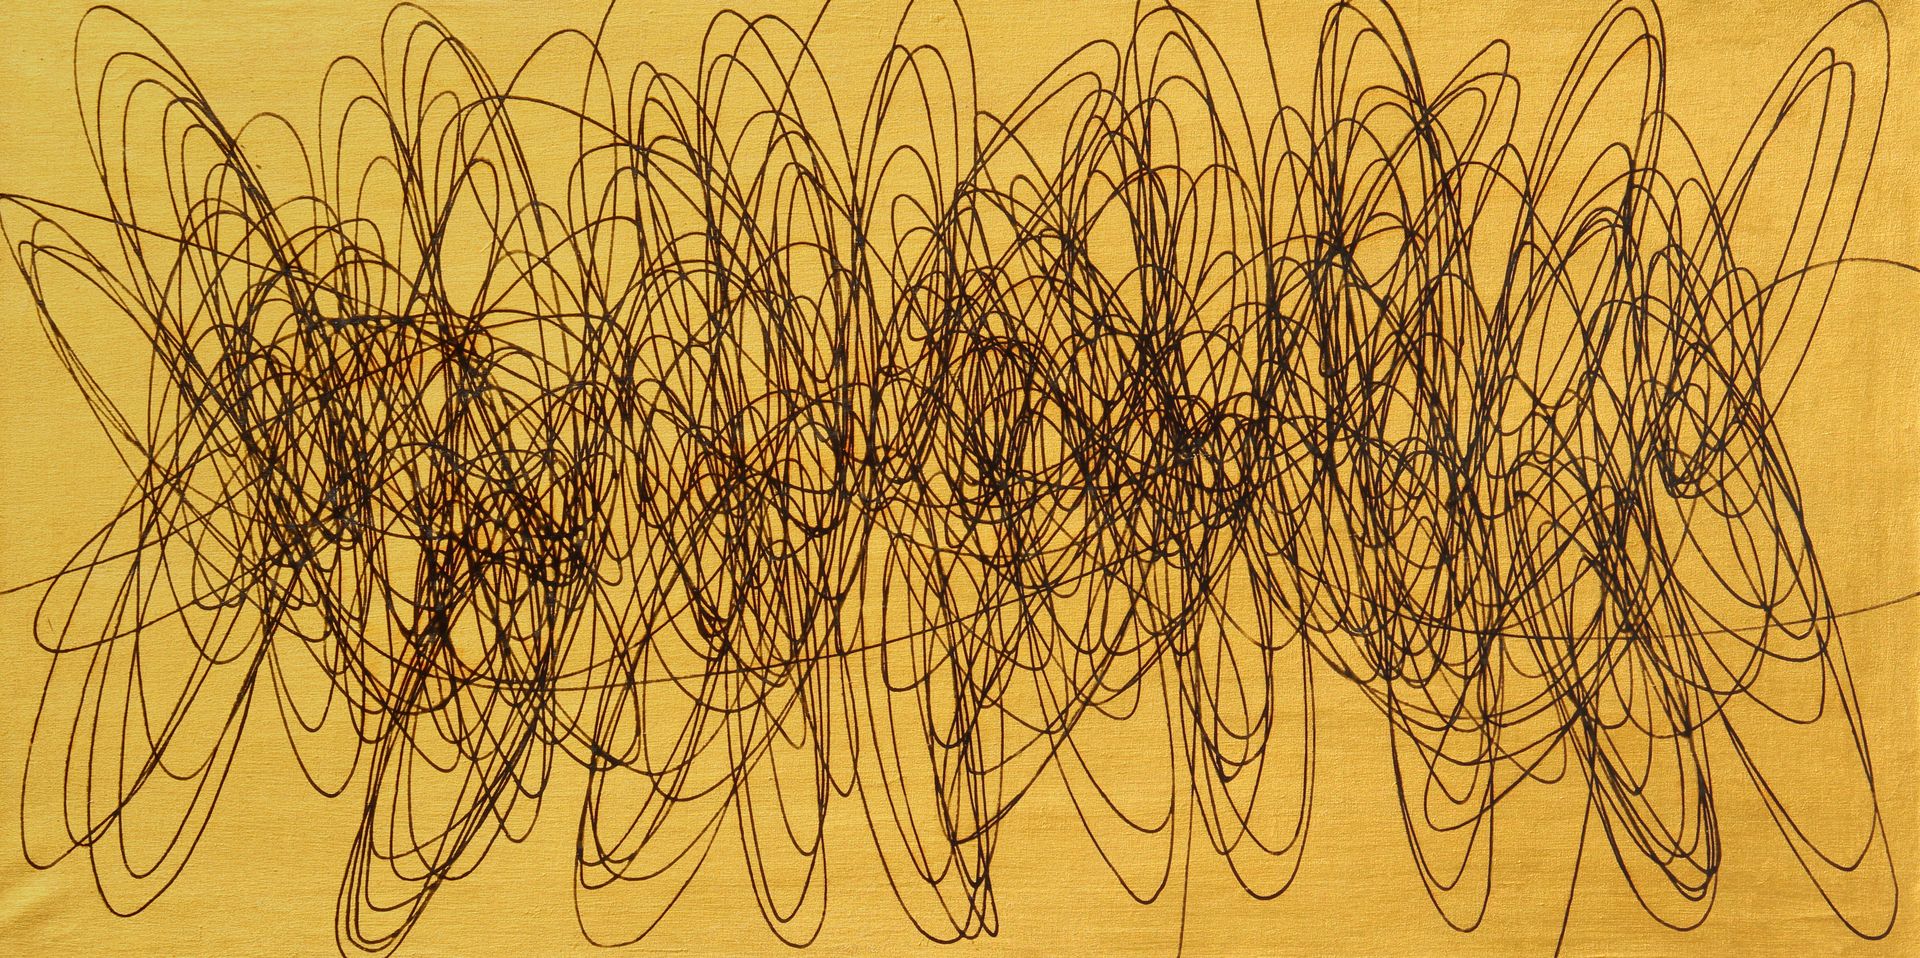 Roberto CRIPPA Spirale 1951年，布面油画，厘米，60x120

小罗伯托-克里帕的证书，编号为。ADN 0/10/xxvii/01